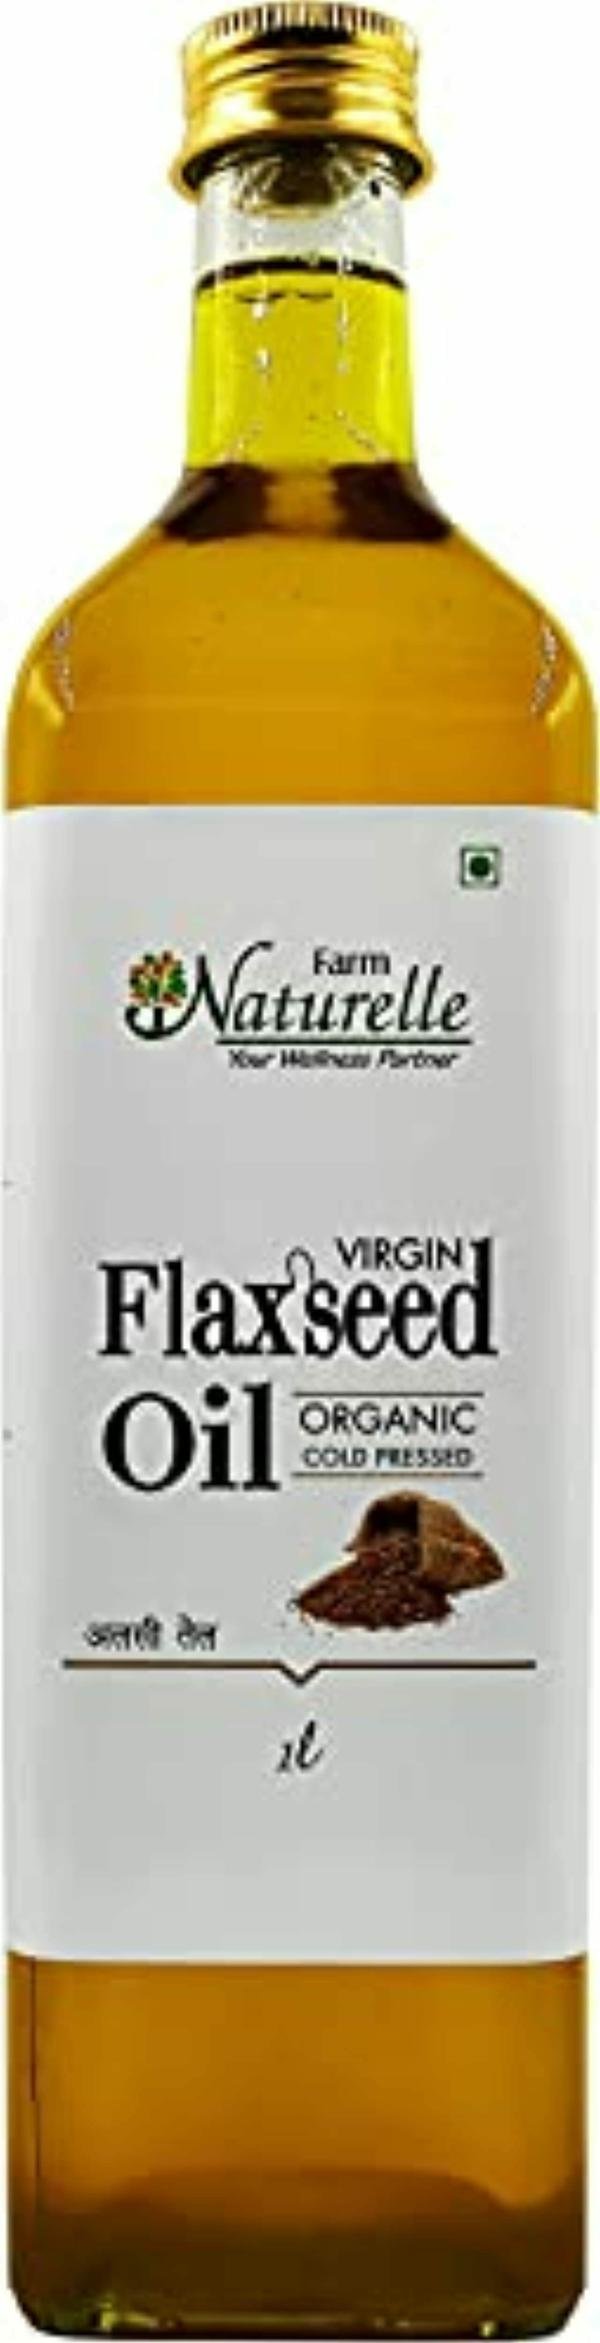 farm naturelle farm natural produce 100 percent pure organic flax seed oil hindi alsi oil 1000 ml product images orv1ifzheks p593863313 0 202209200207